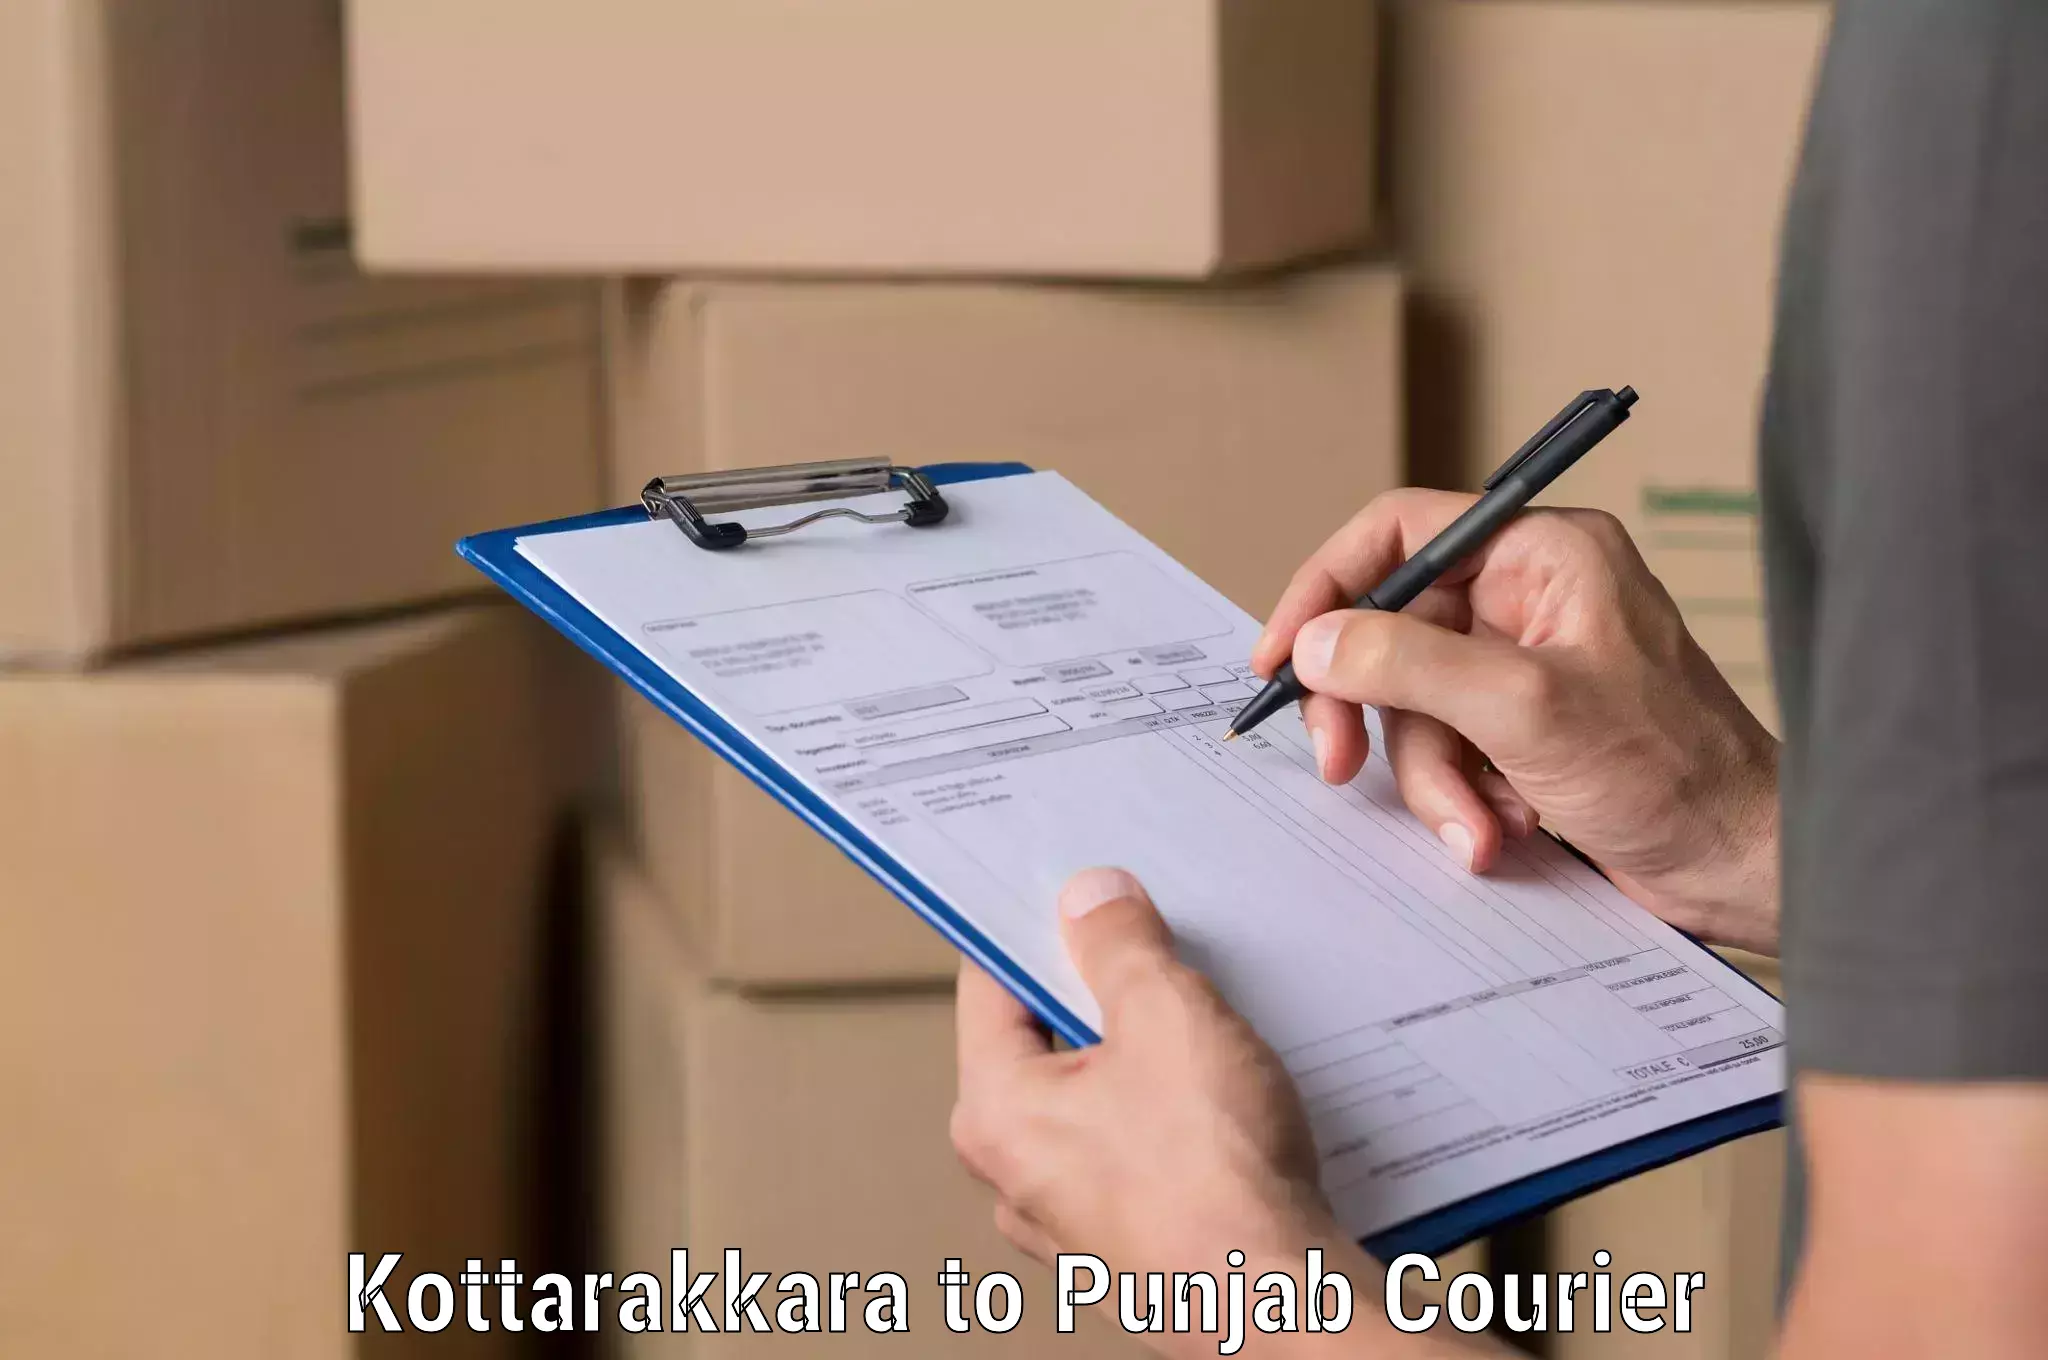 Efficient order fulfillment Kottarakkara to Patiala